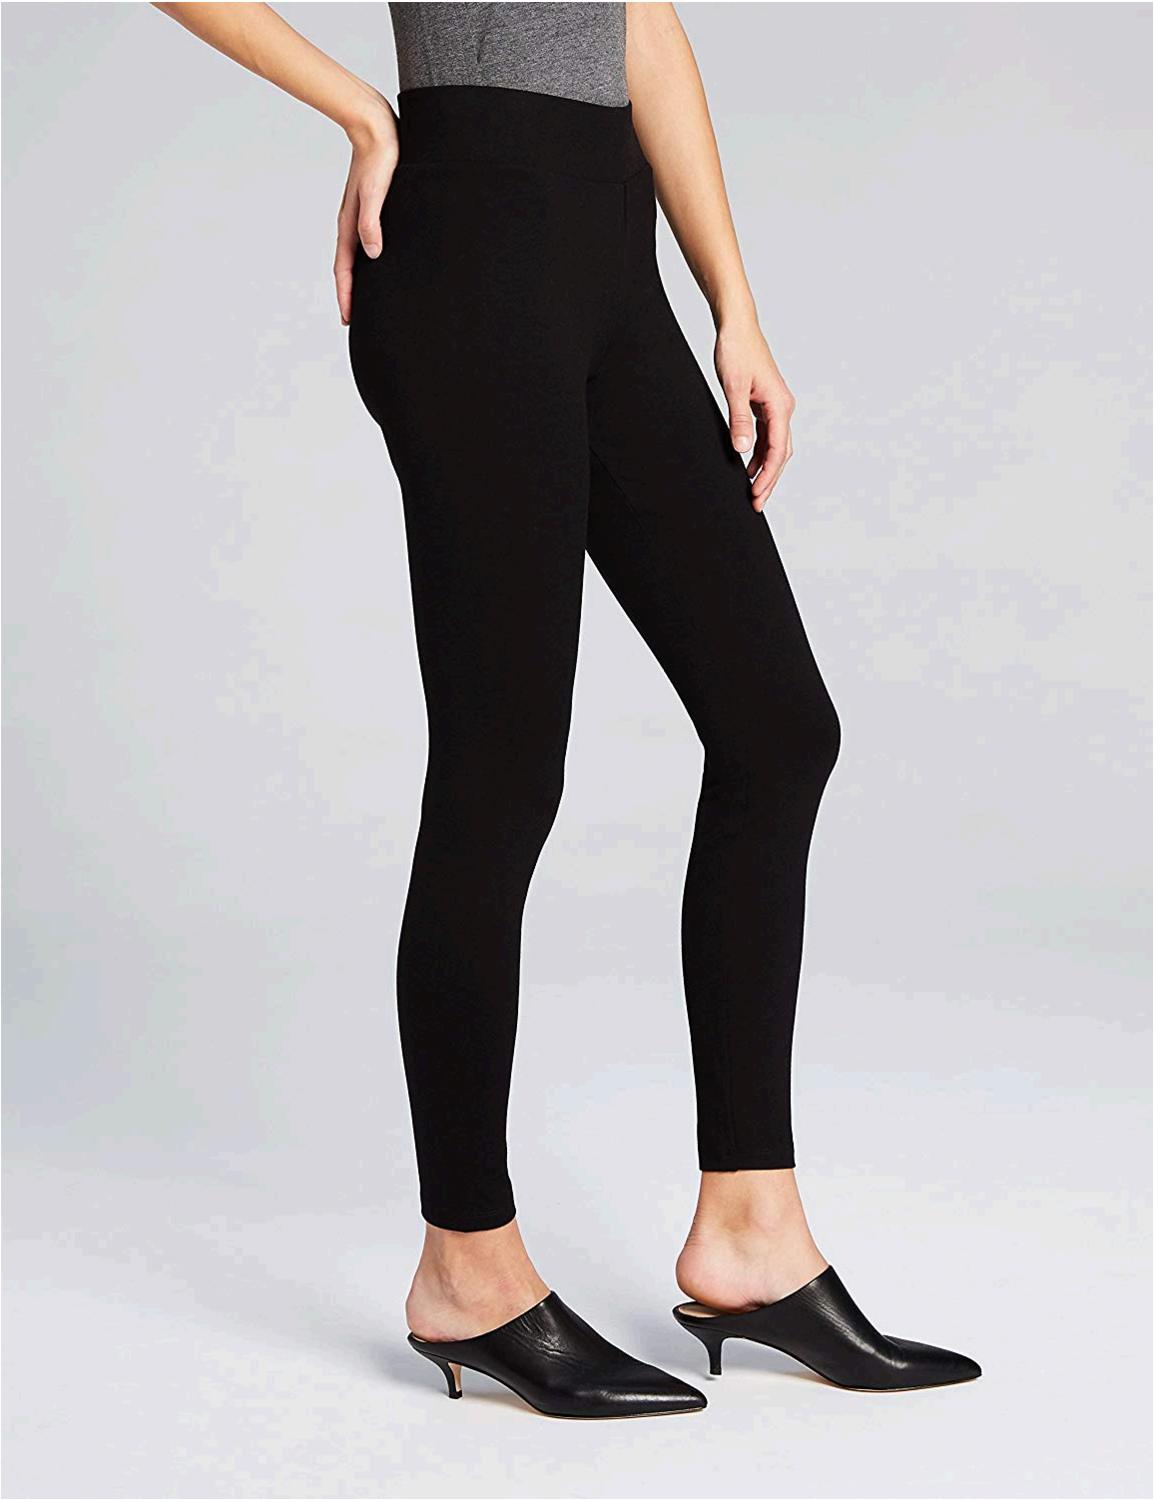 Conceited Premium Women's Stretch Ponte Pants - Dressy Leggings